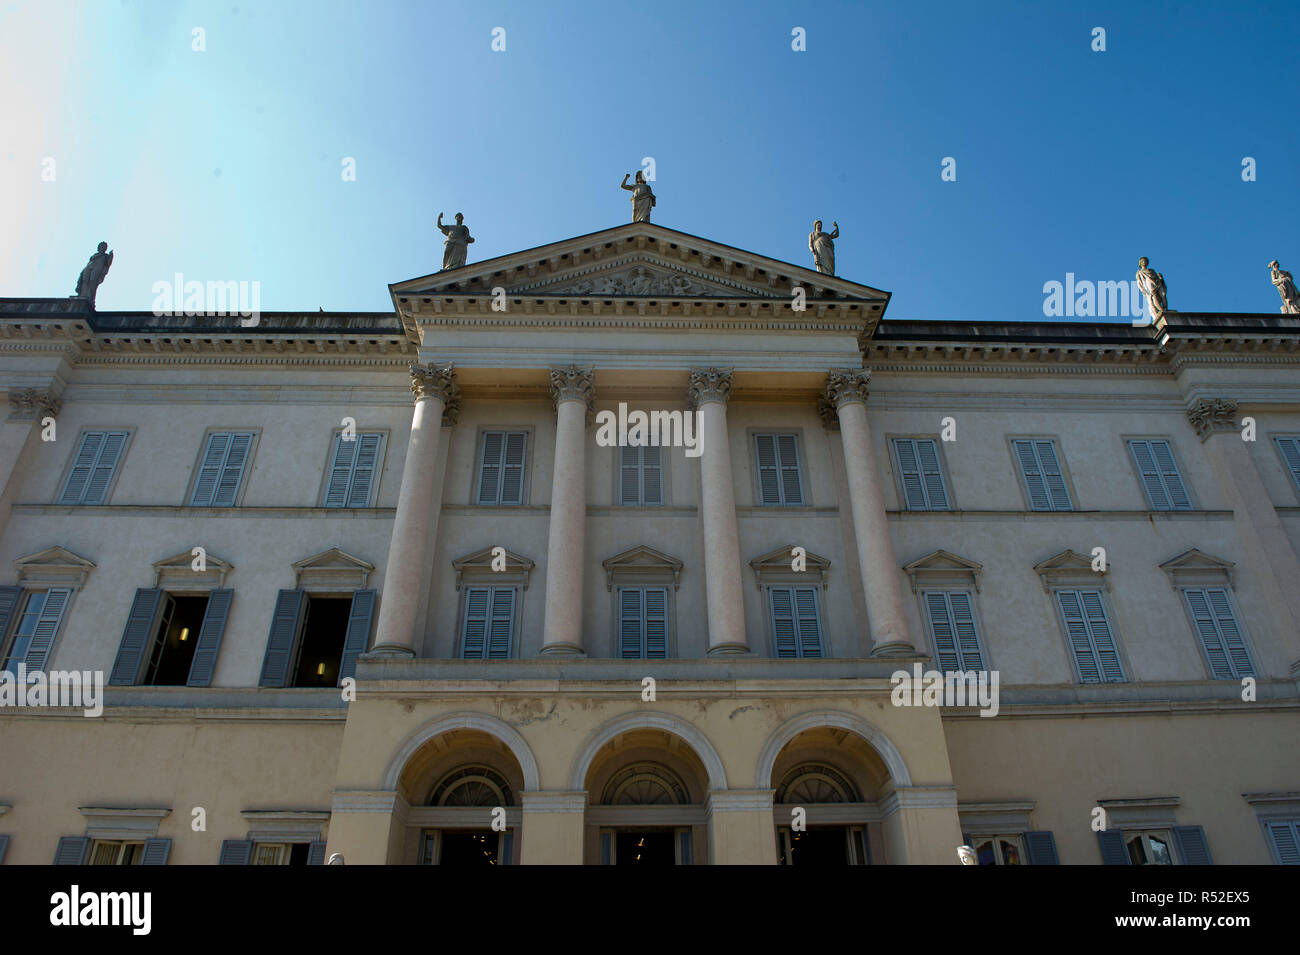 L'Italie, Lombardie, Desio, villa Cusani Tittoni Traversa, conçu par l'architecte. Giuseppe Piermarini, façade néoclassique. Banque D'Images